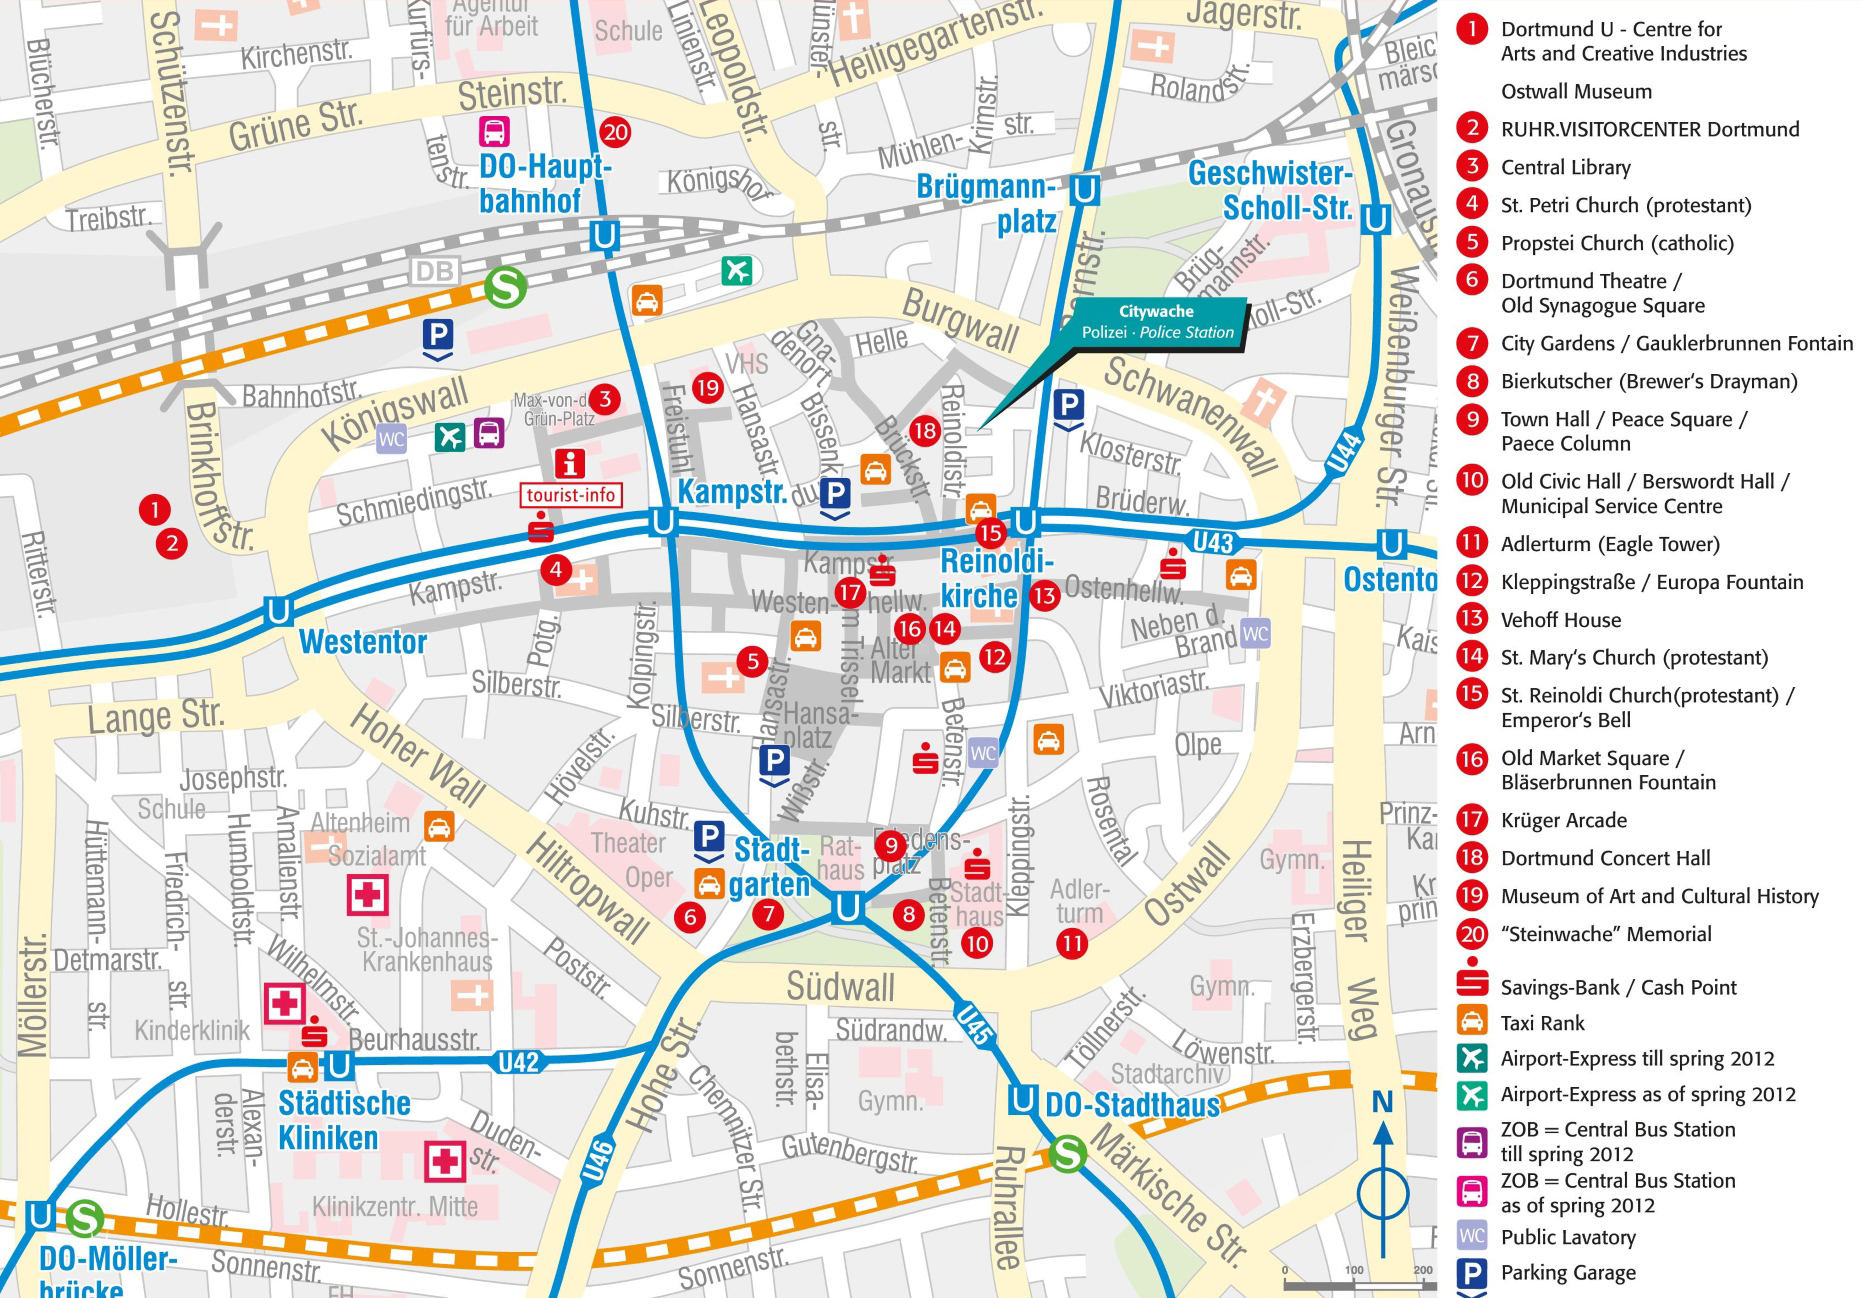 dortmund mapa Large Dortmund Maps for Free Download and Print | High Resolution  dortmund mapa